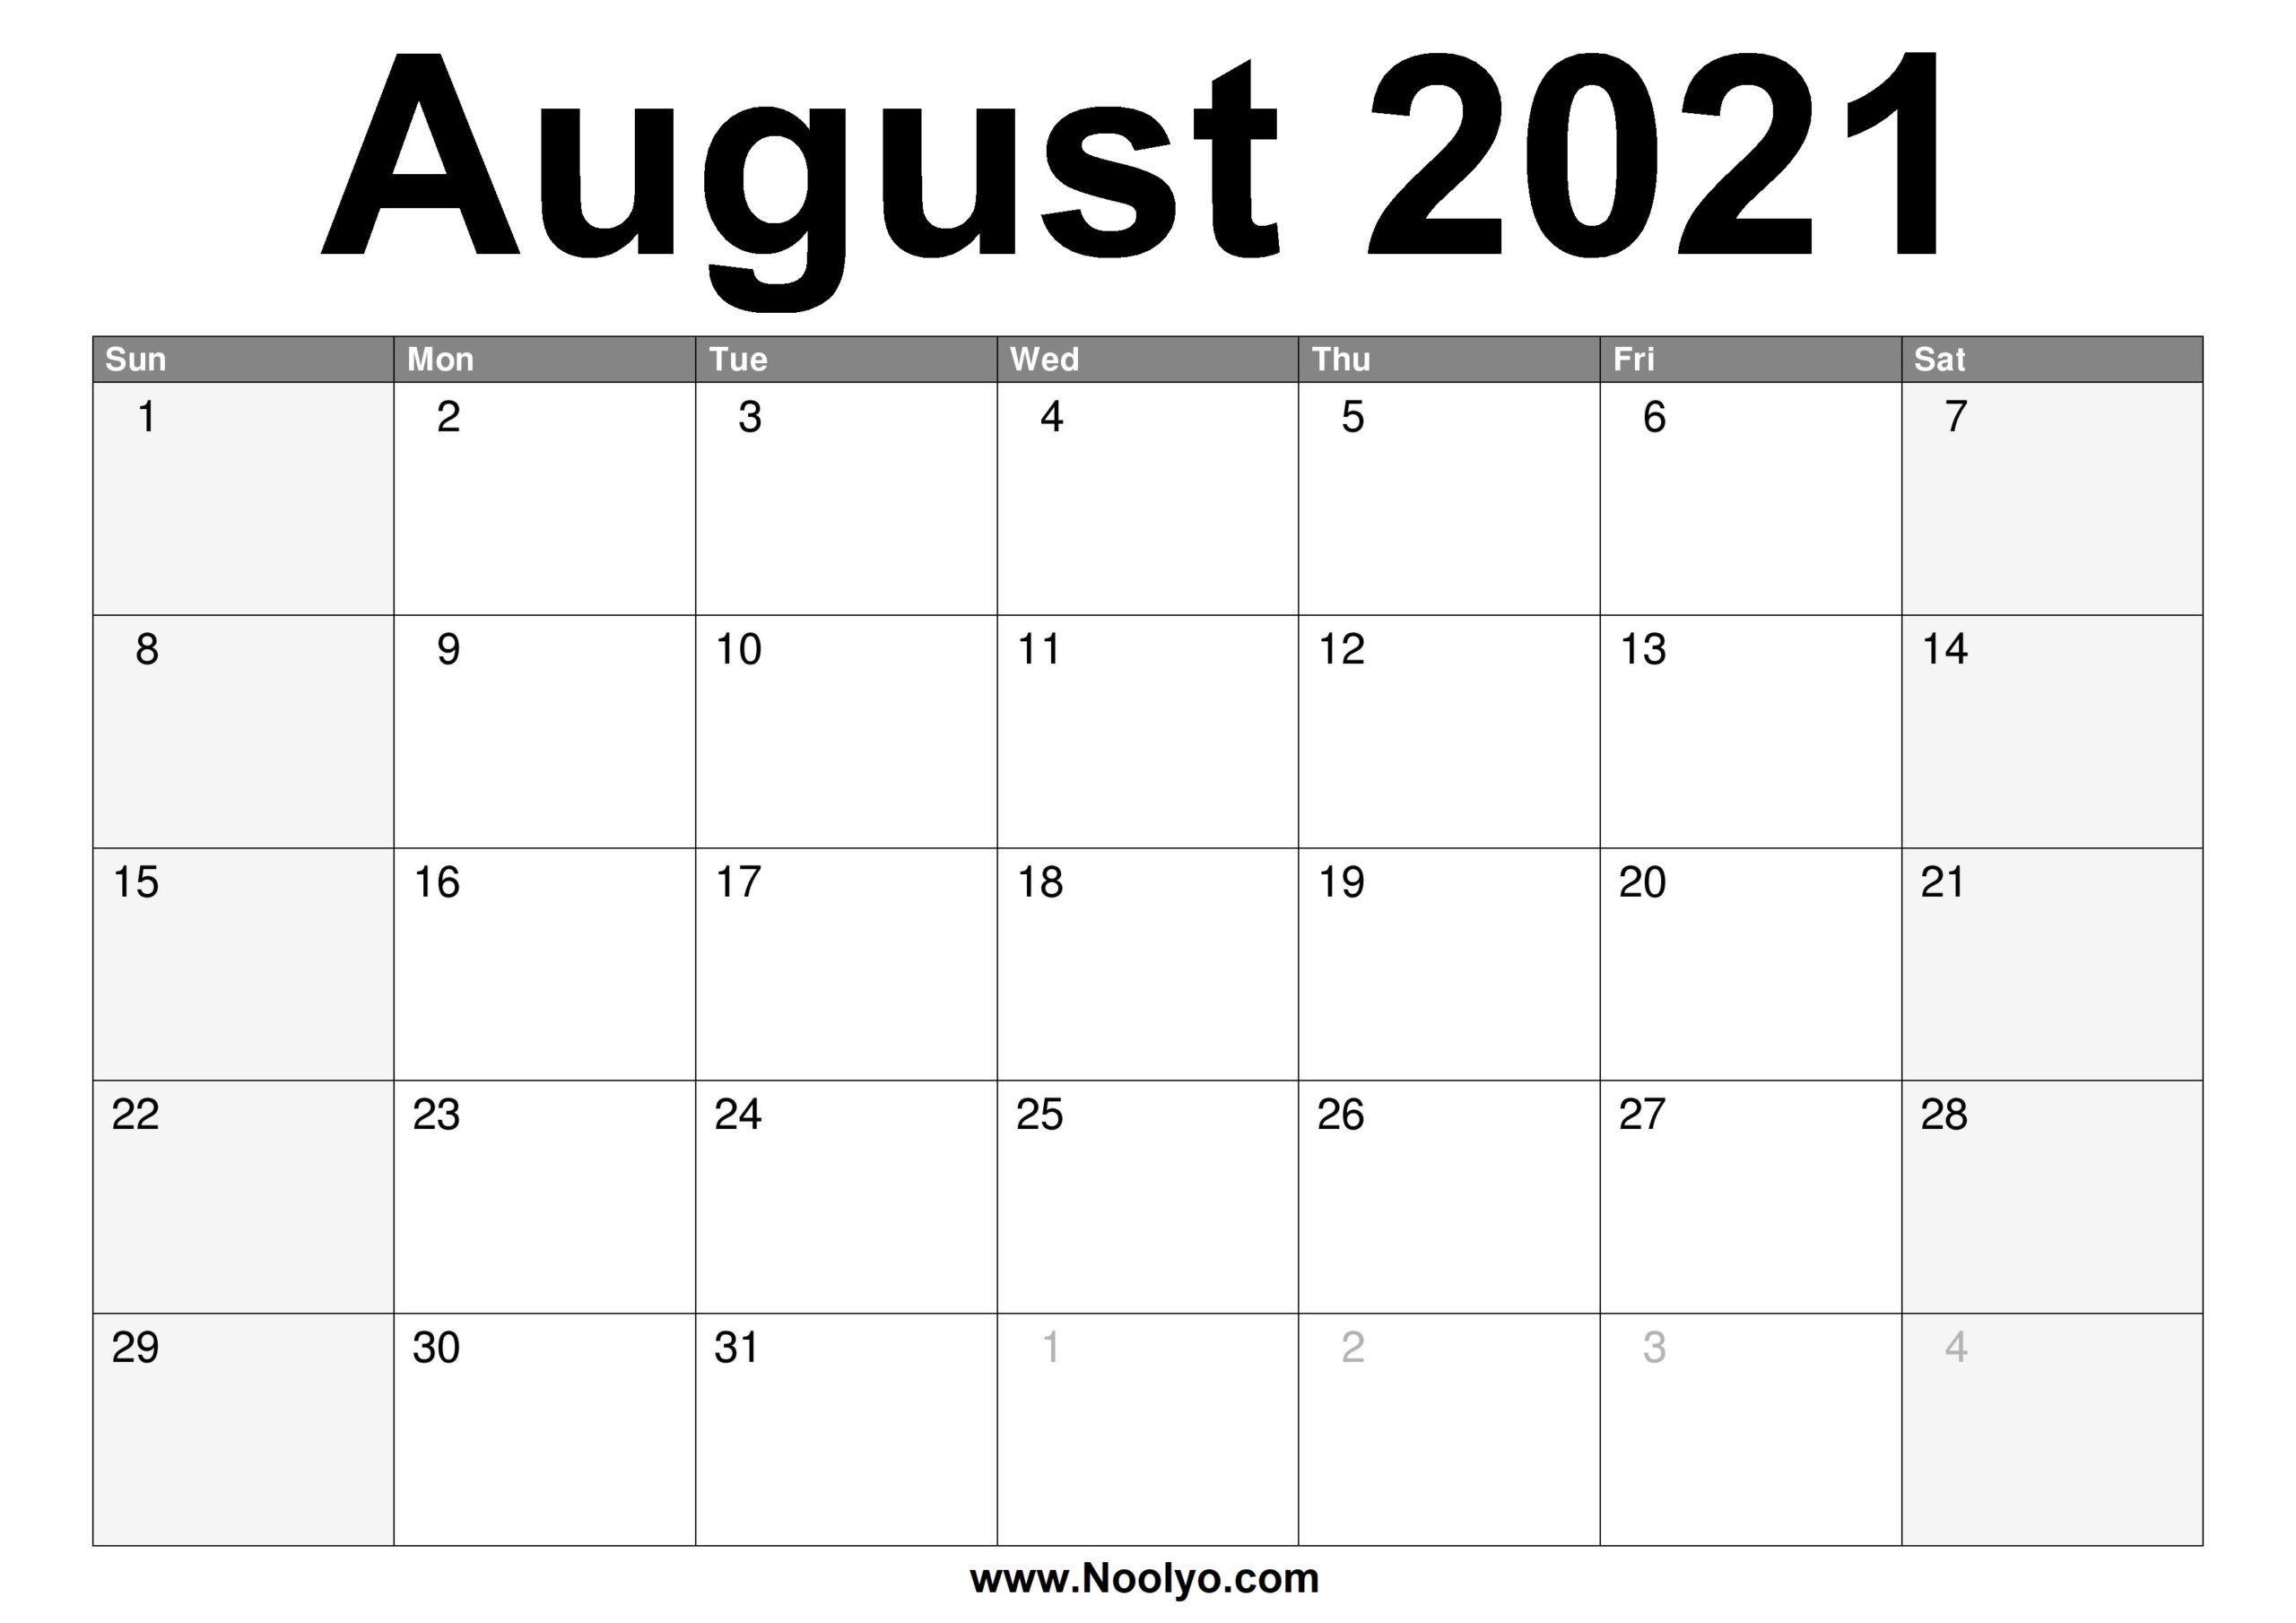 August 2021 Calendar Printable – Free Download